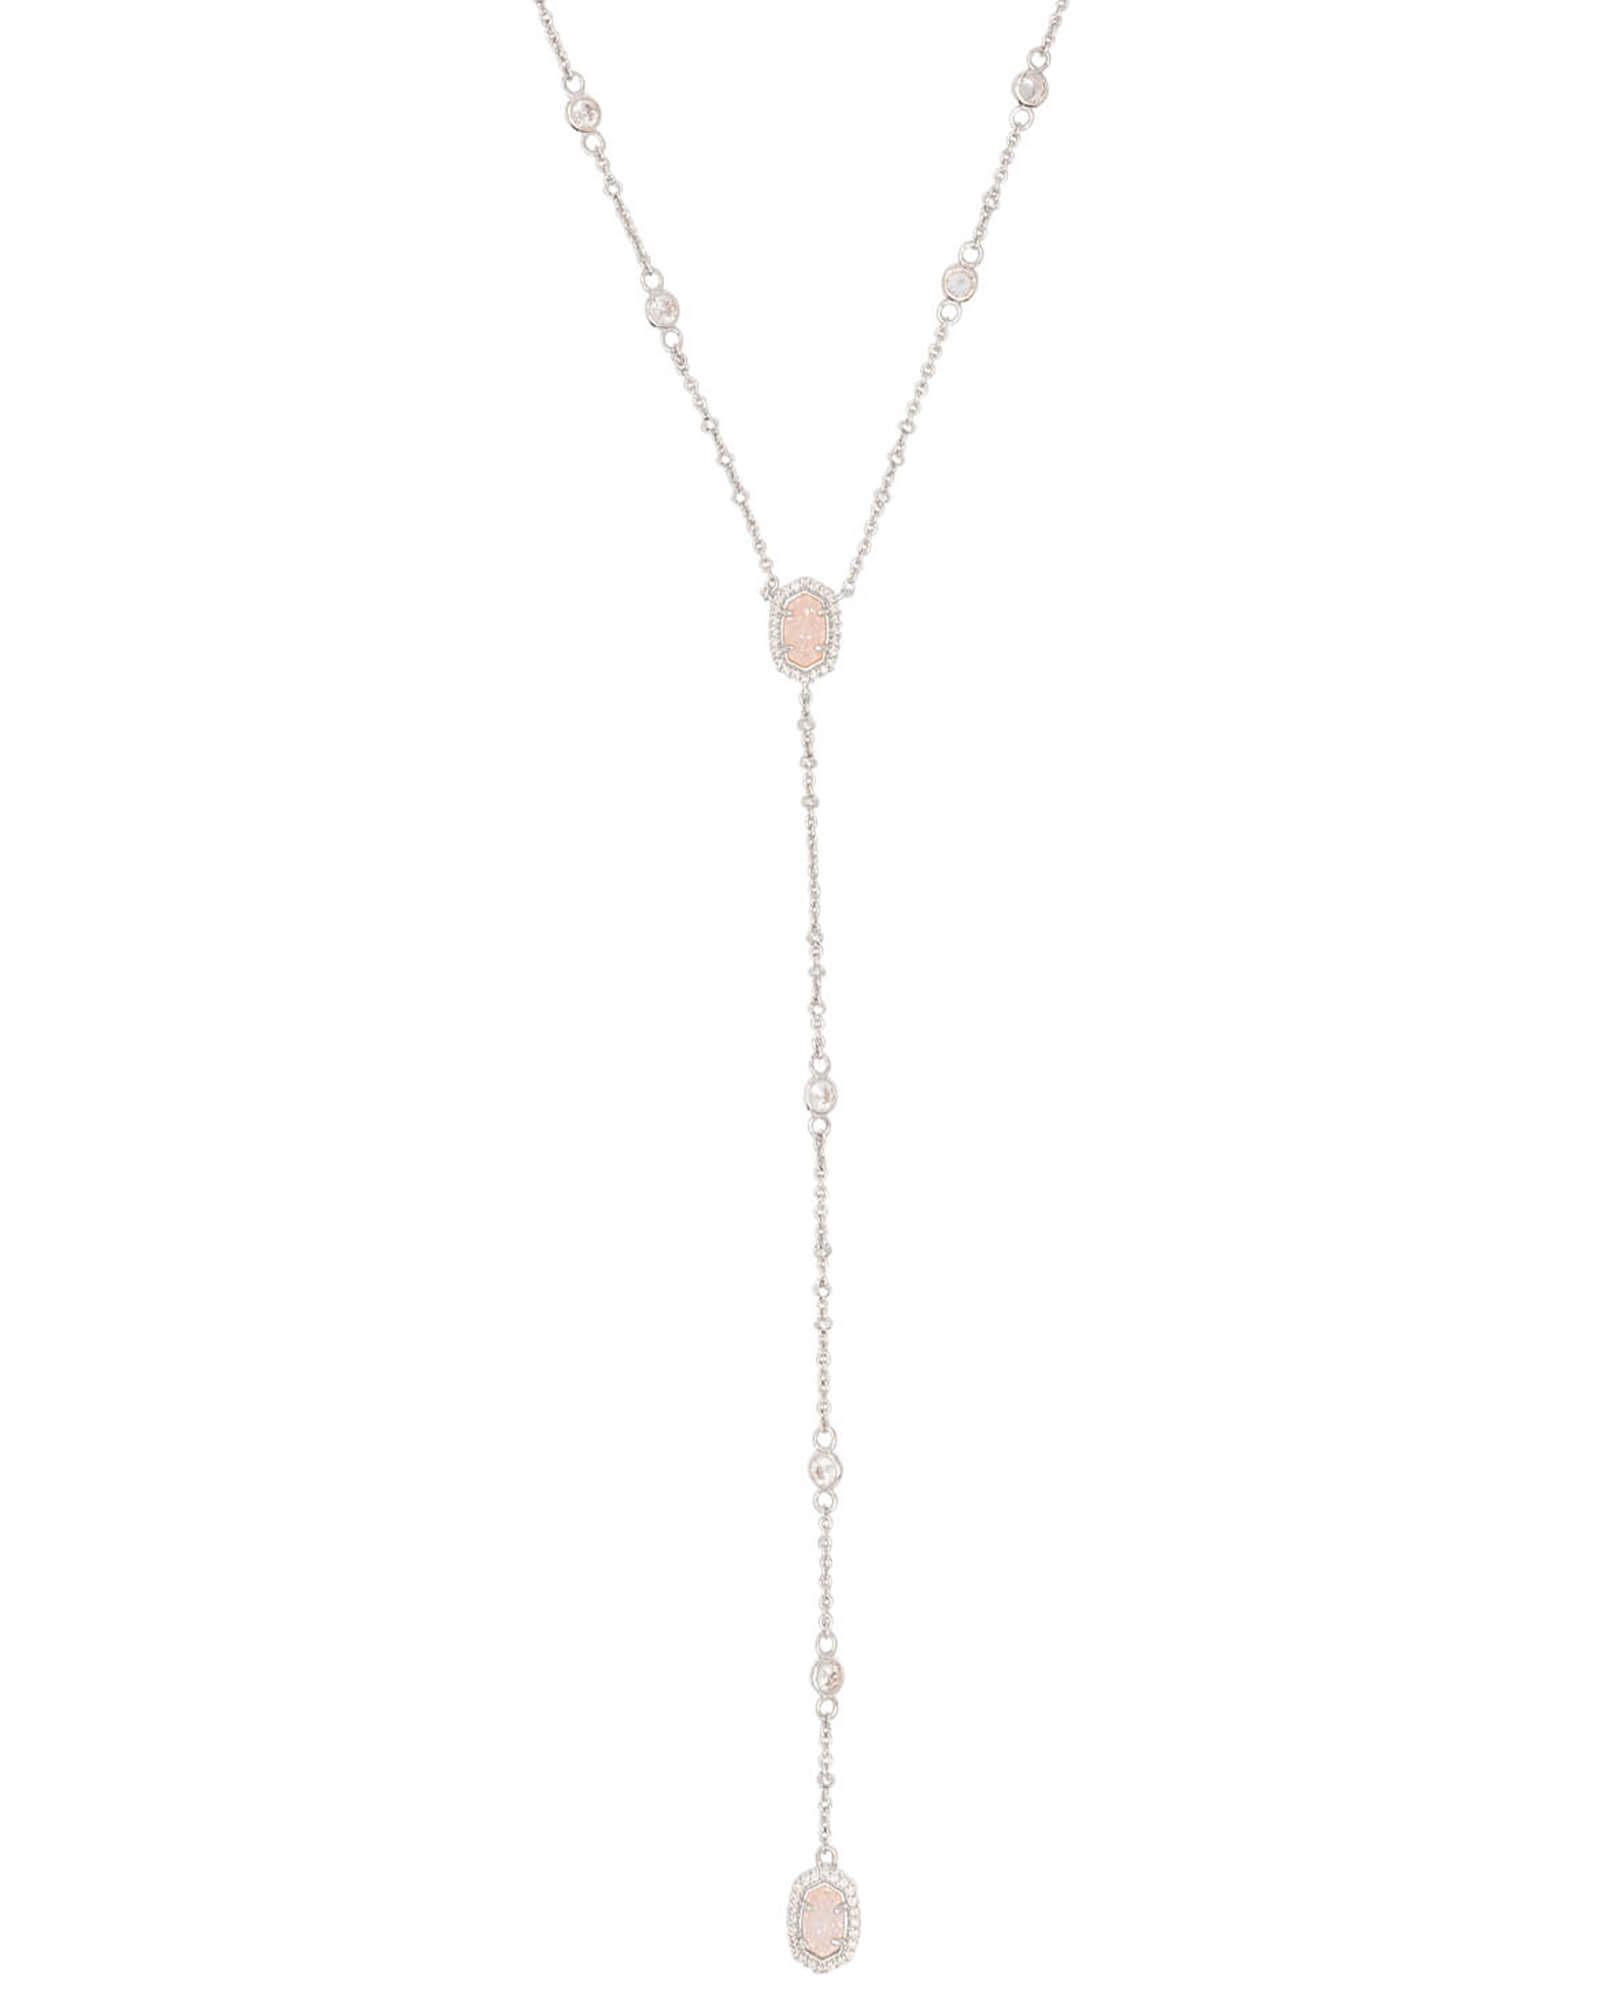 Claudia Silver Lariat Necklace | Kendra Scott Bridal Jewelry